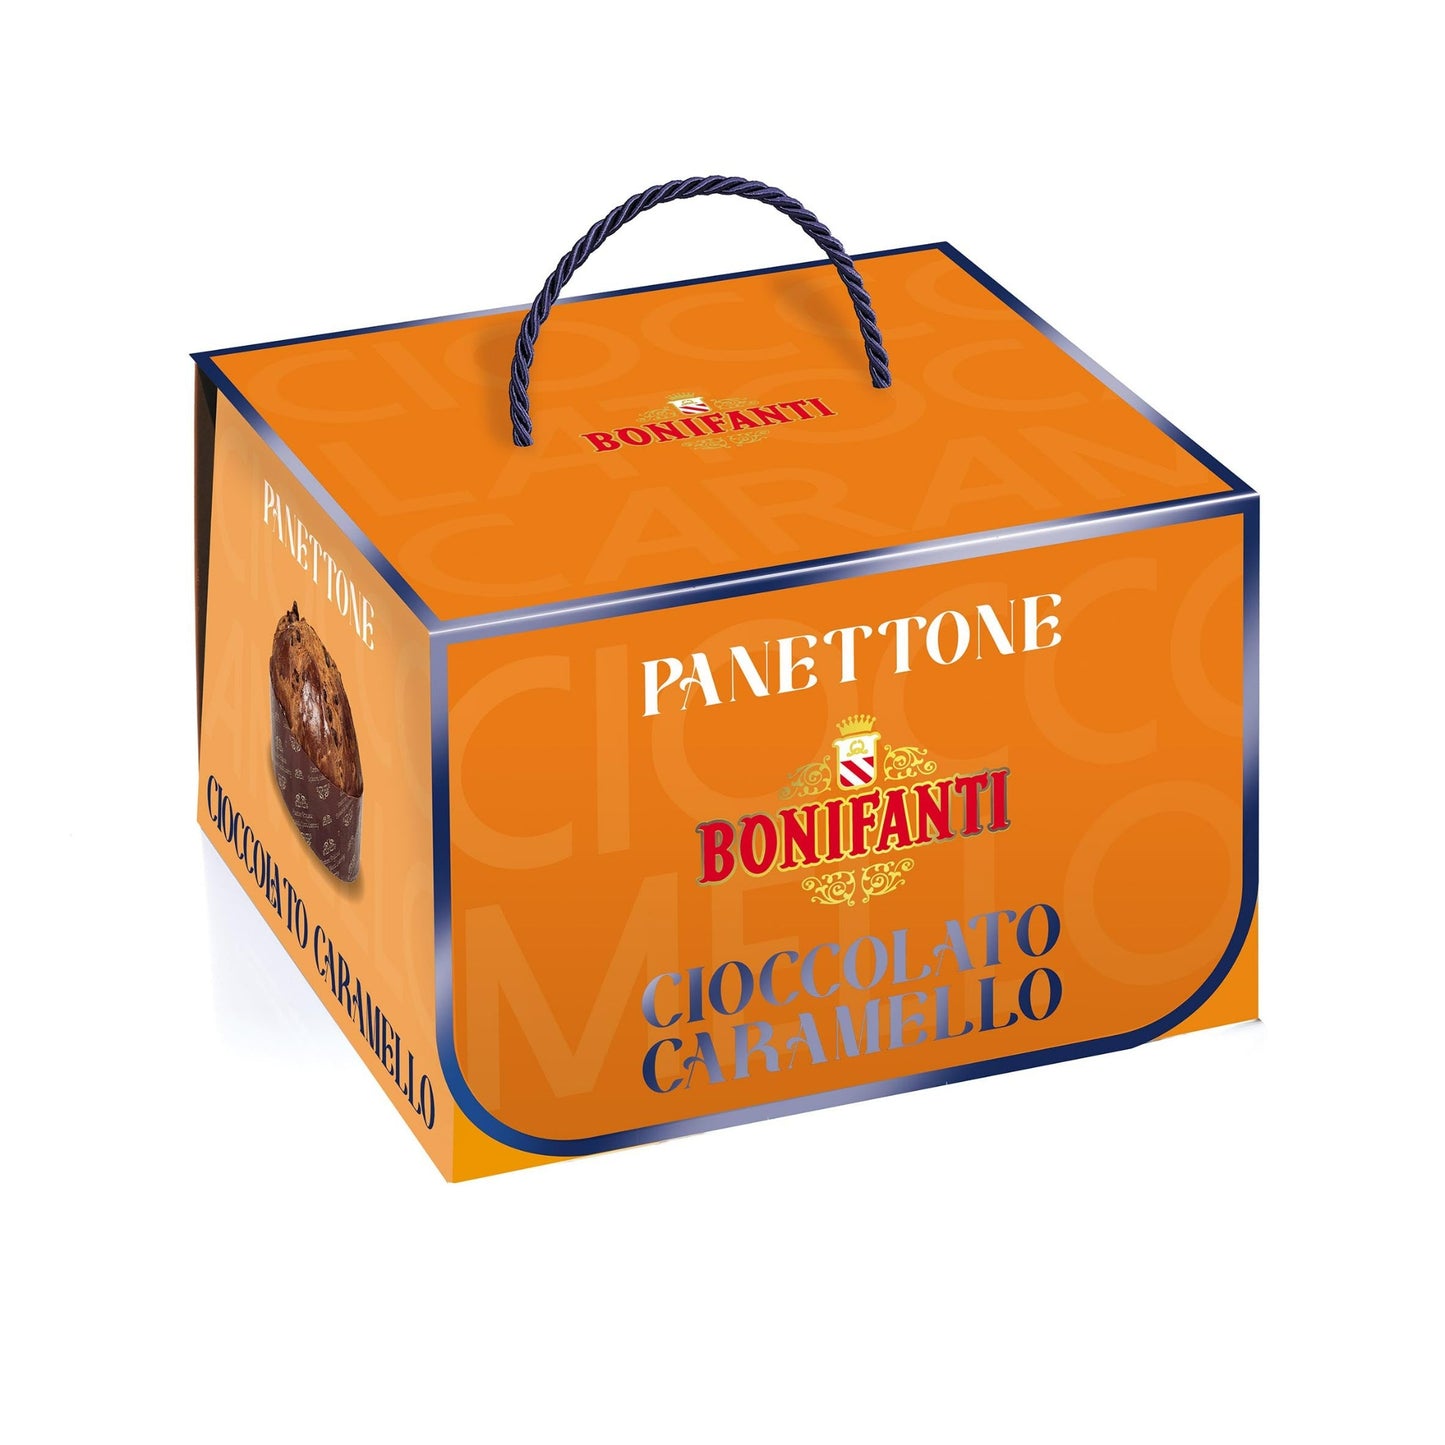 Bonifanti Caramel & Chocolate Panettone 750g - Frankies Pantry and Cellar